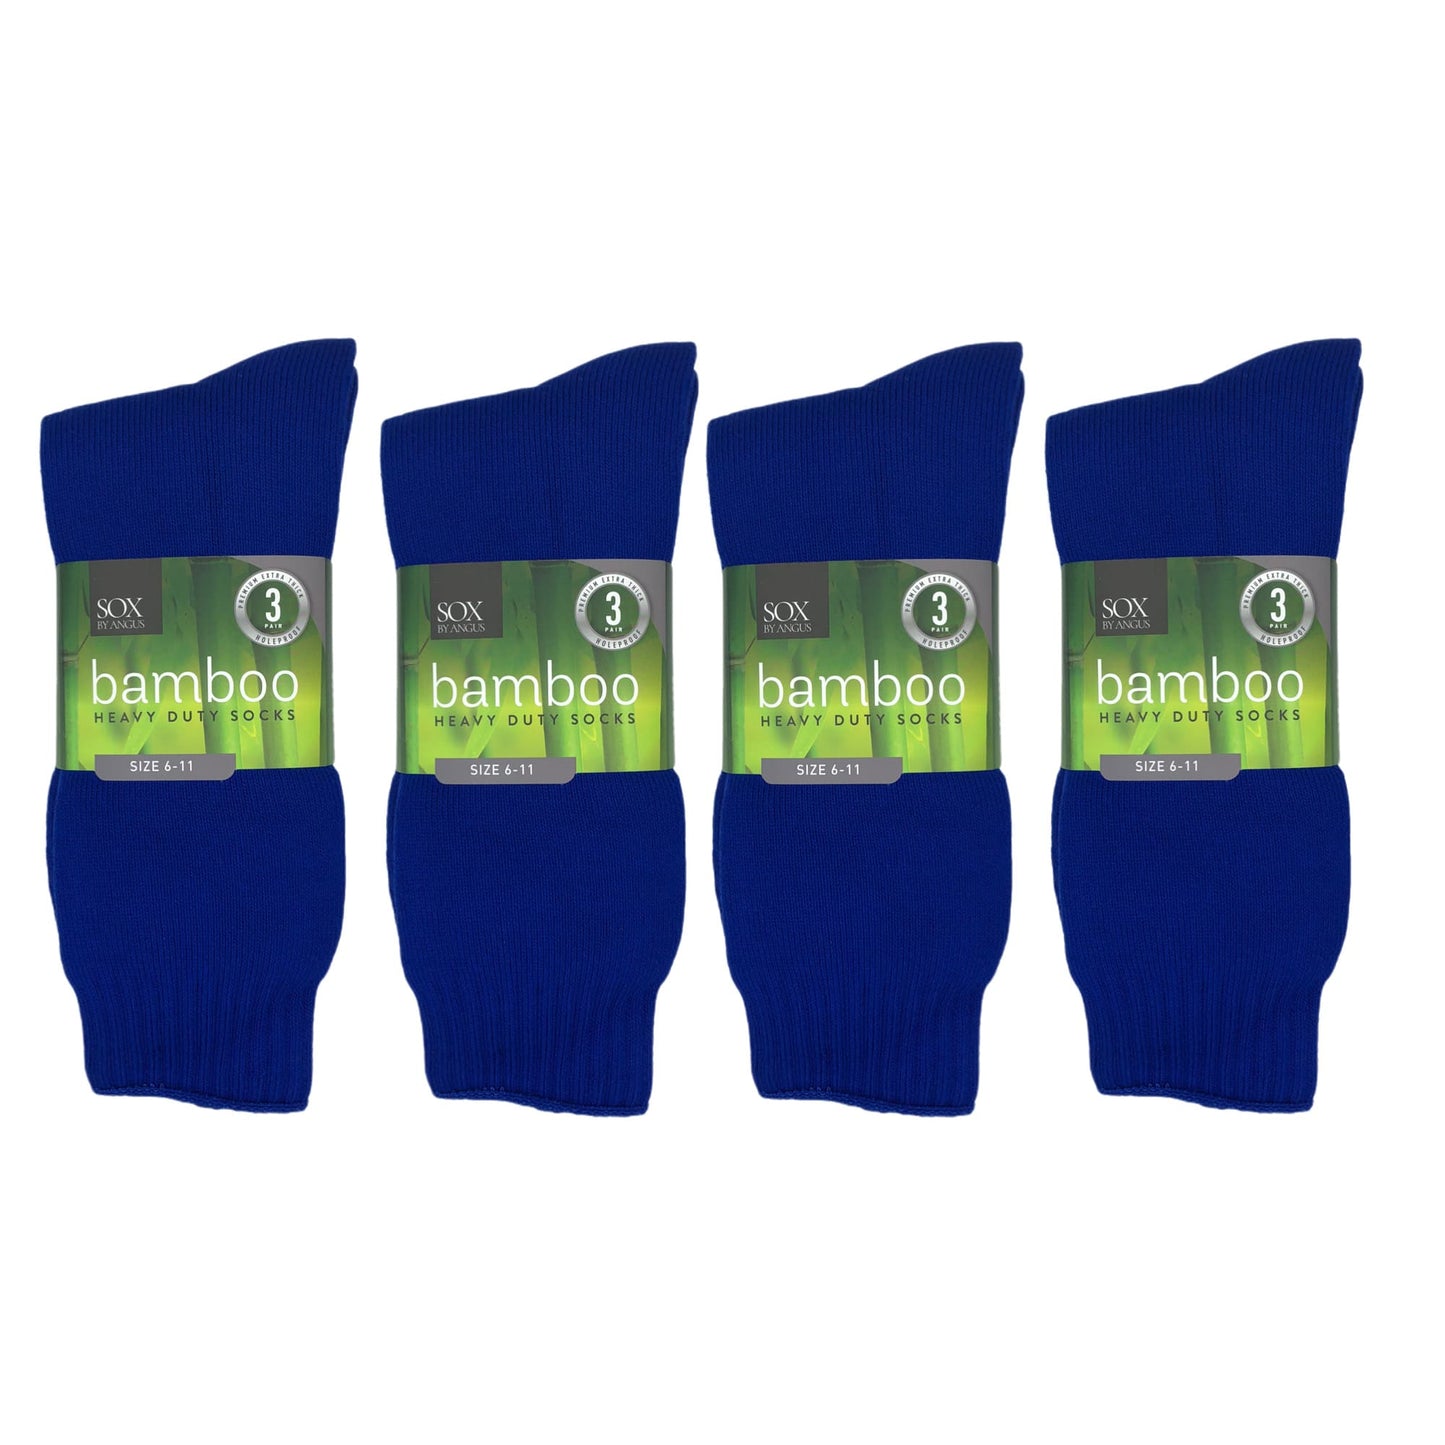 Bamboo Heavy Duty Socks - 3 Pairs Pack - Royal Blue